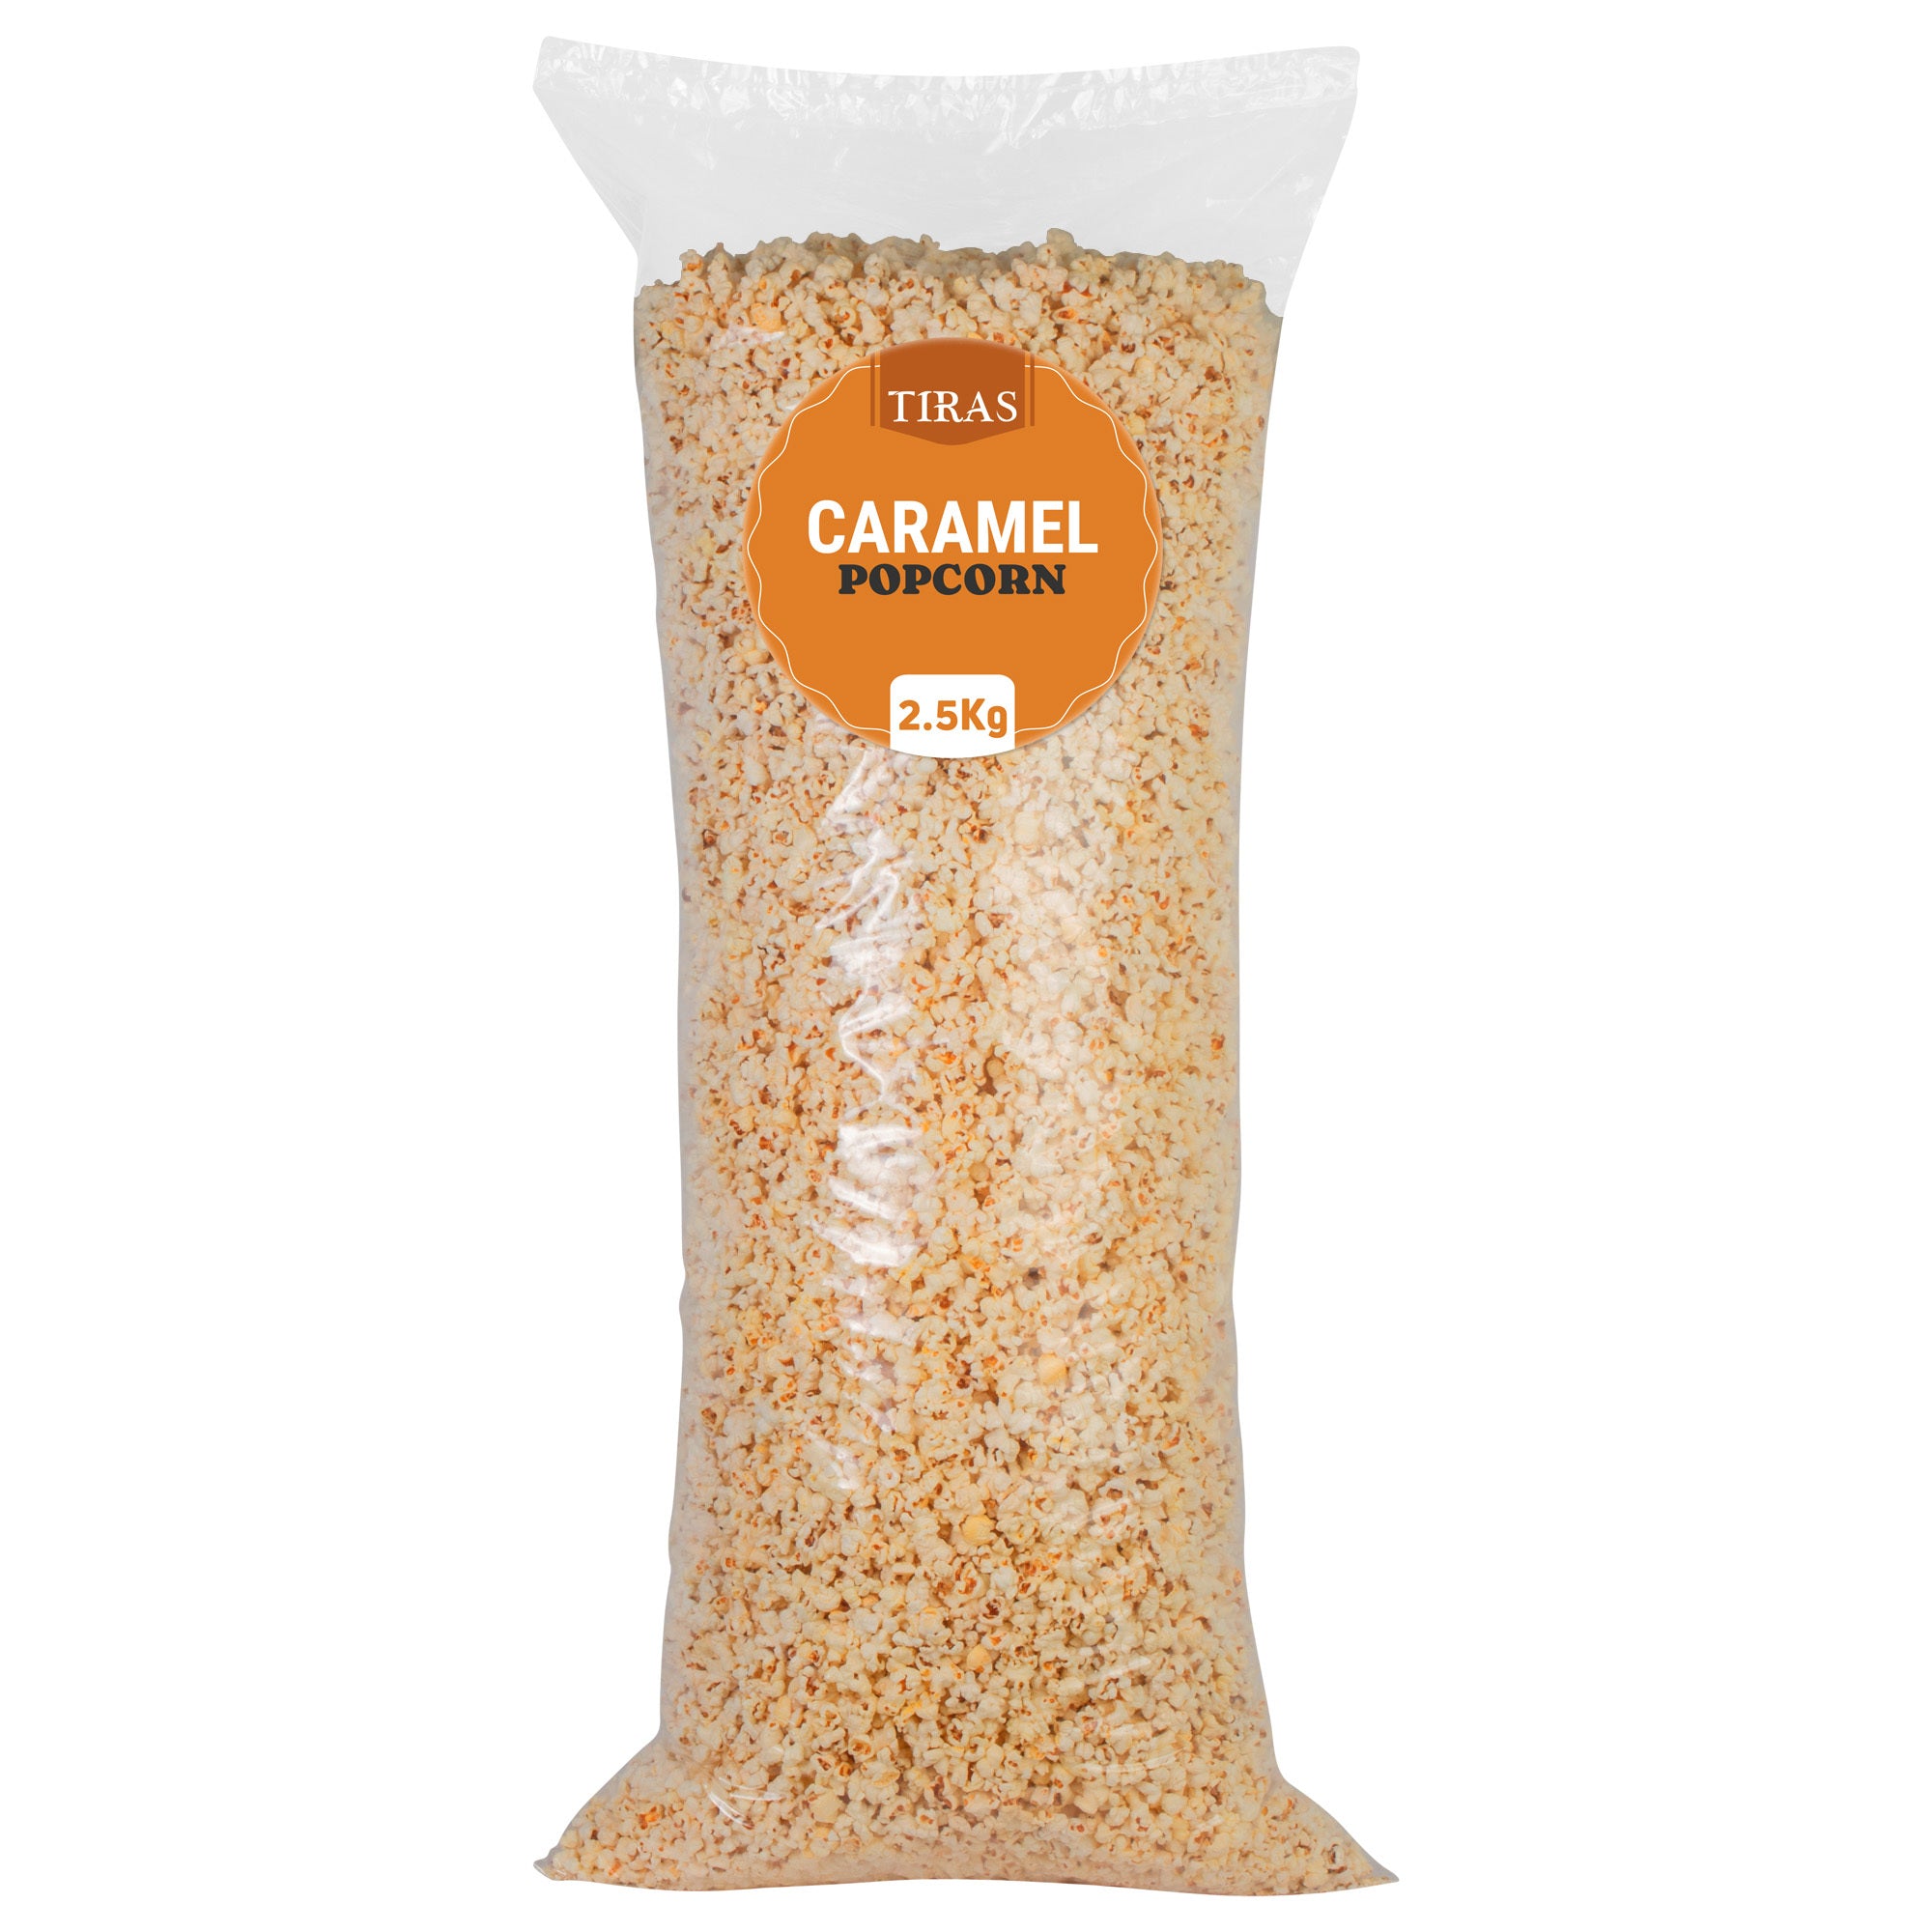 Ready-Made Caramel Popcorn 2.5kg